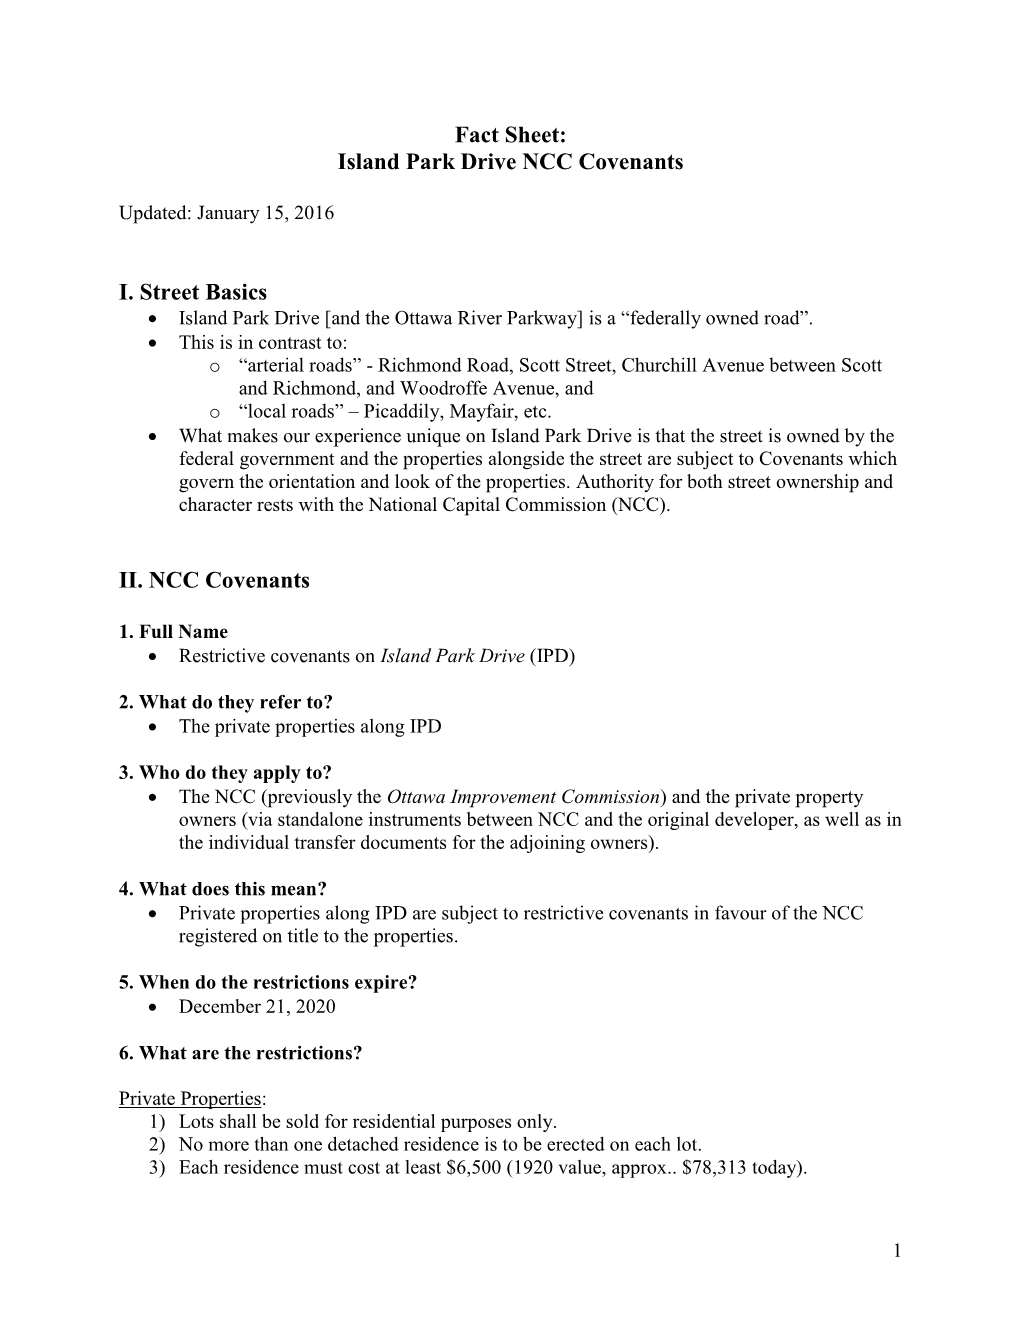 Fact Sheet: Island Park Drive NCC Covenants